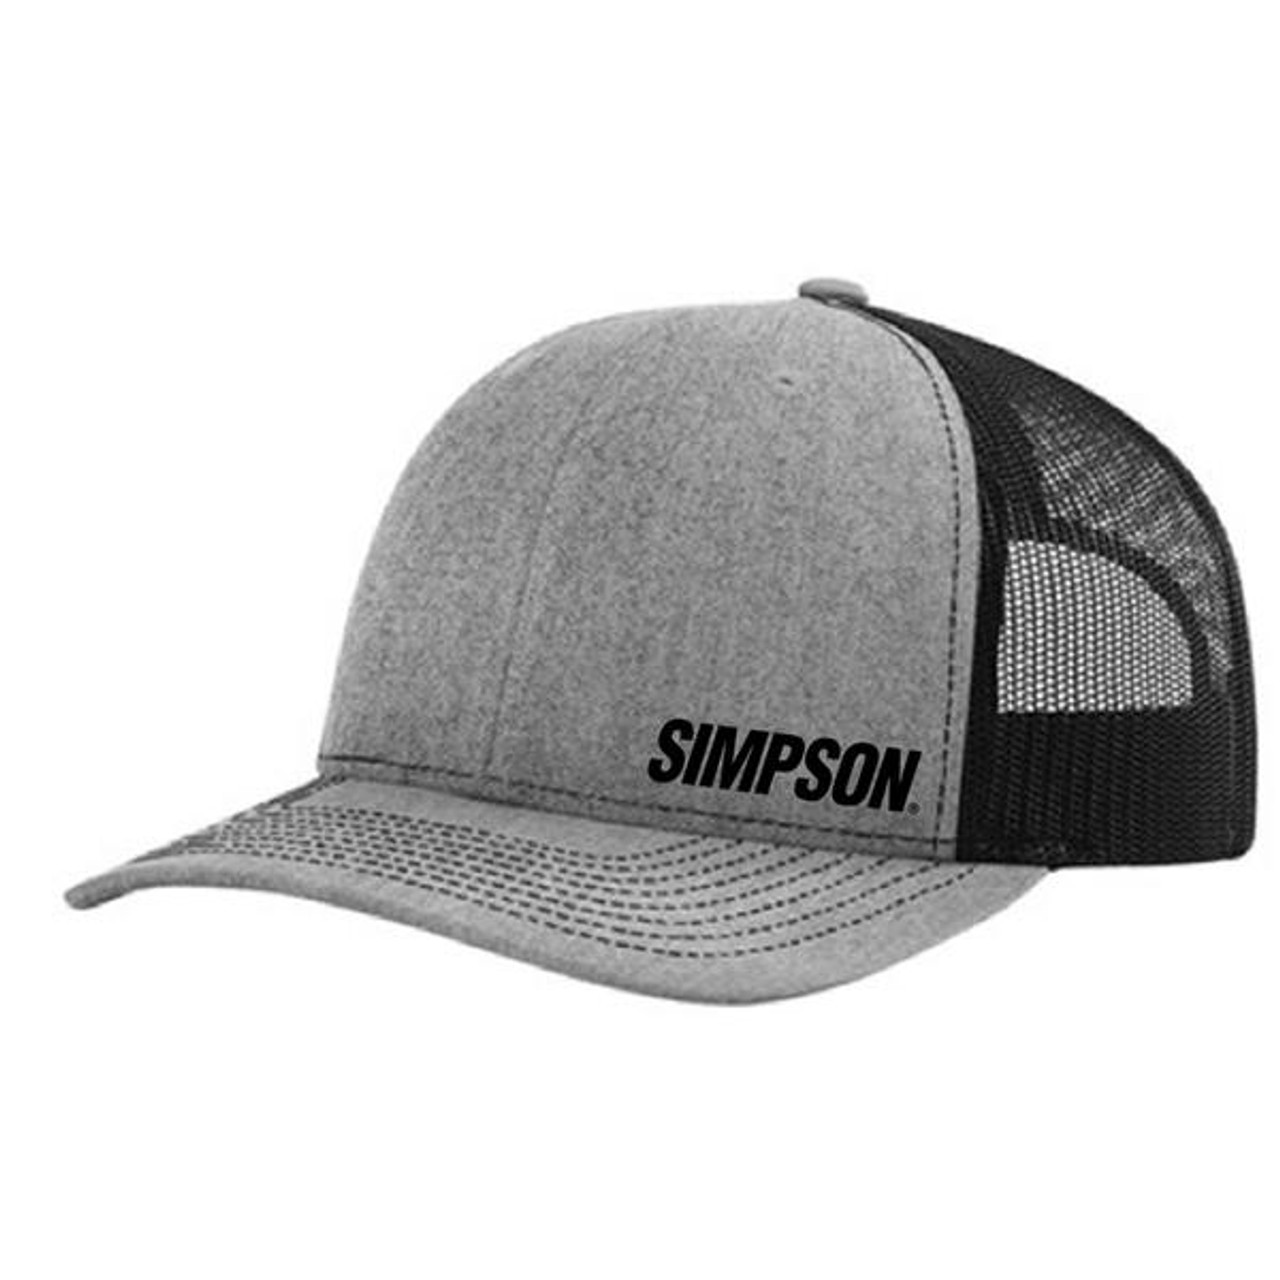 Simpson Ashen Grey Hat snap back Baseball Cap